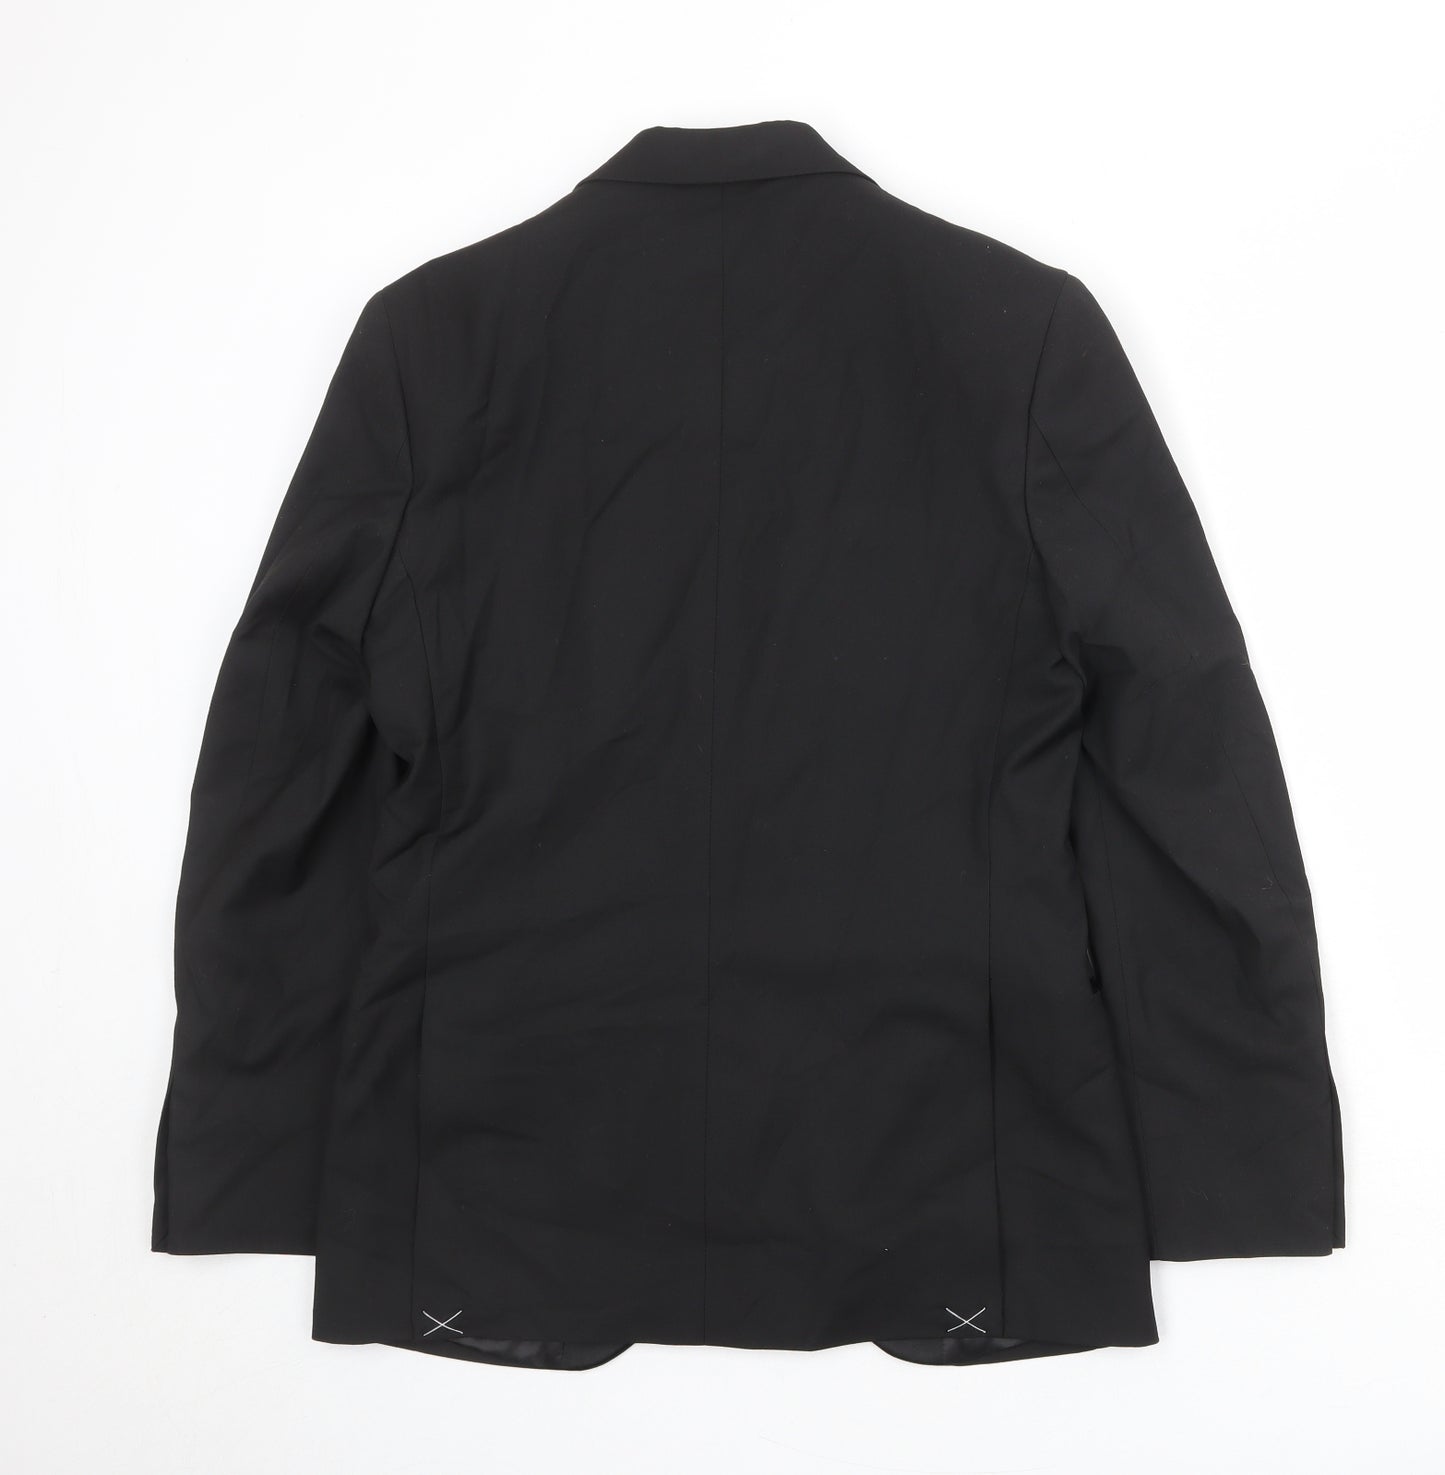 Marks and Spencer Mens Black Polyester Tuxedo Suit Jacket Size 36 Regular